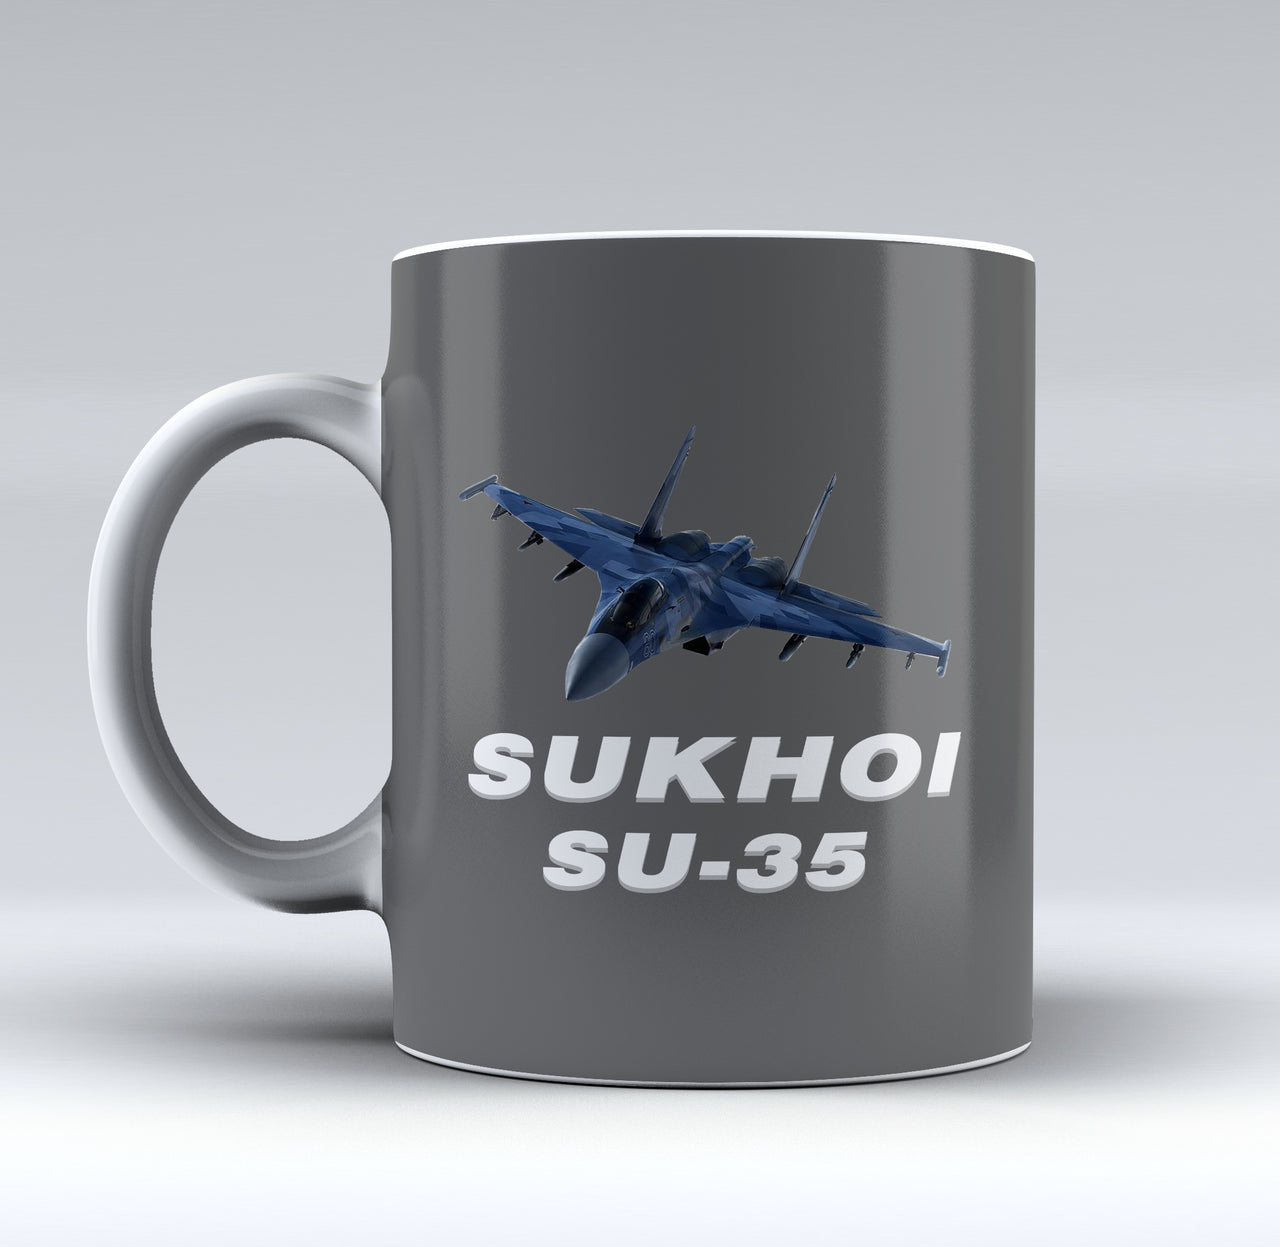 The Sukhoi SU-35 Designed Mugs